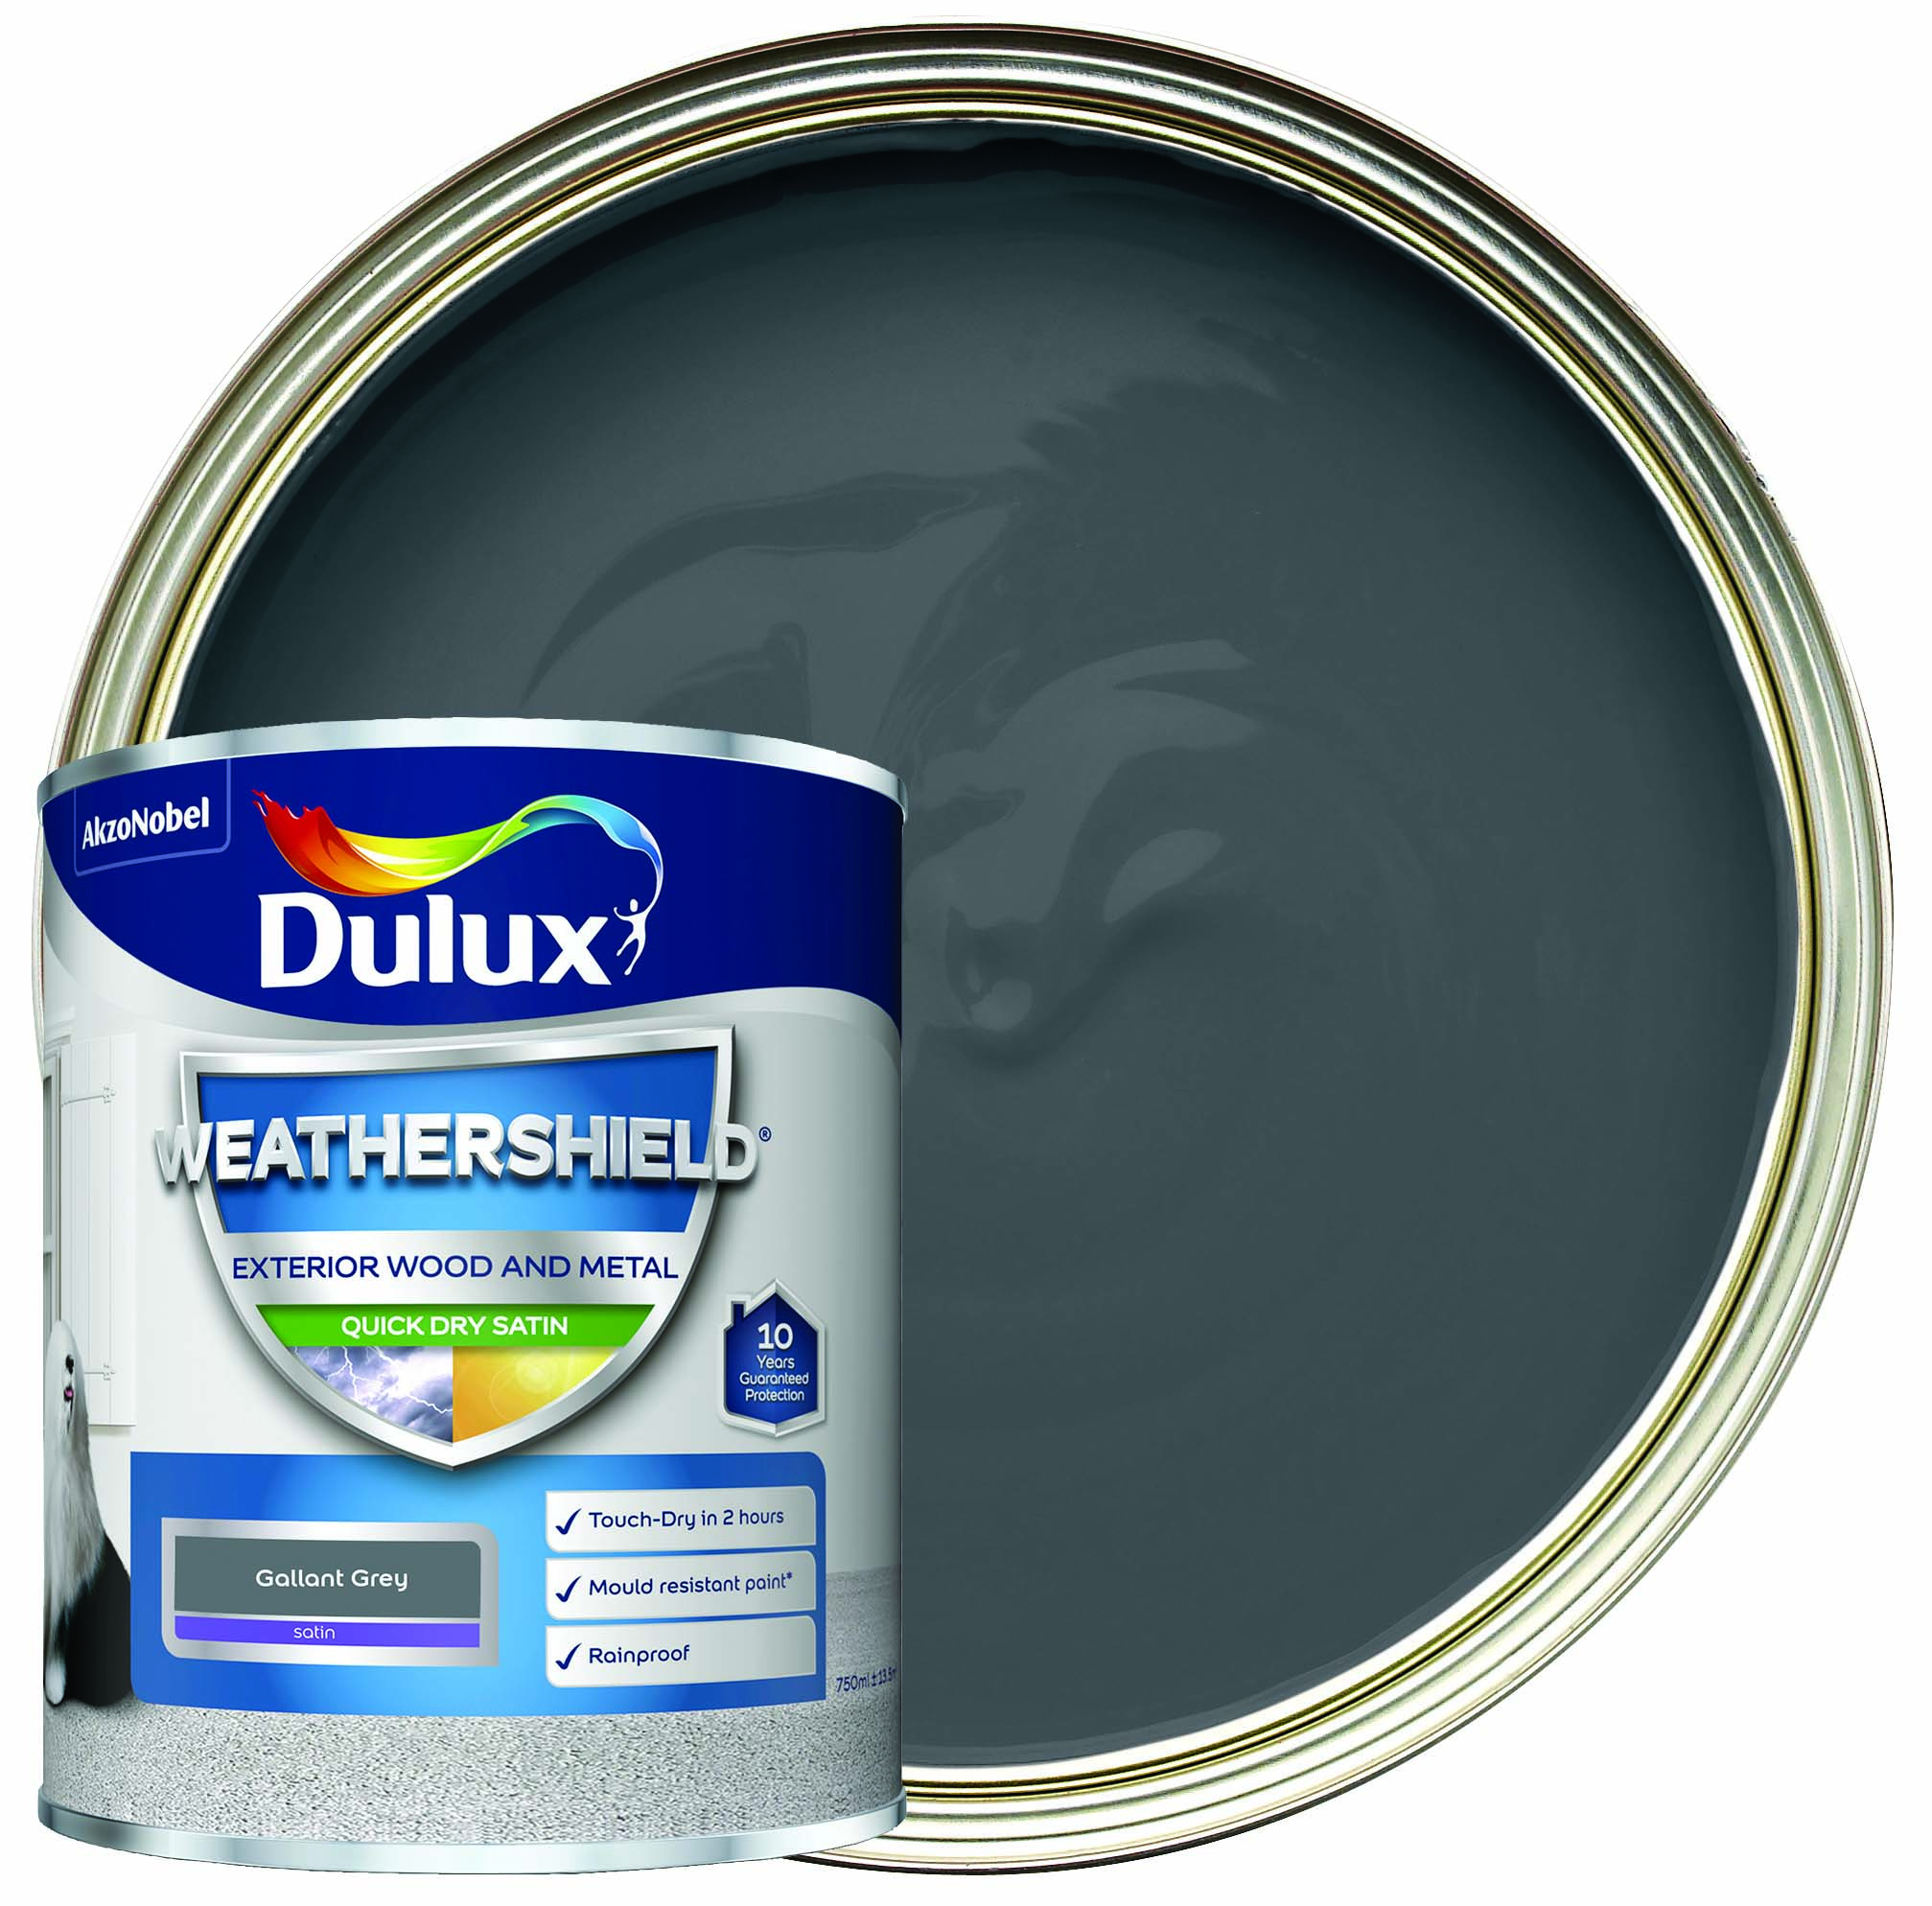 Image of Dulux Weathershield Quick Dry Satin Paint - Gallant Grey - 750ml